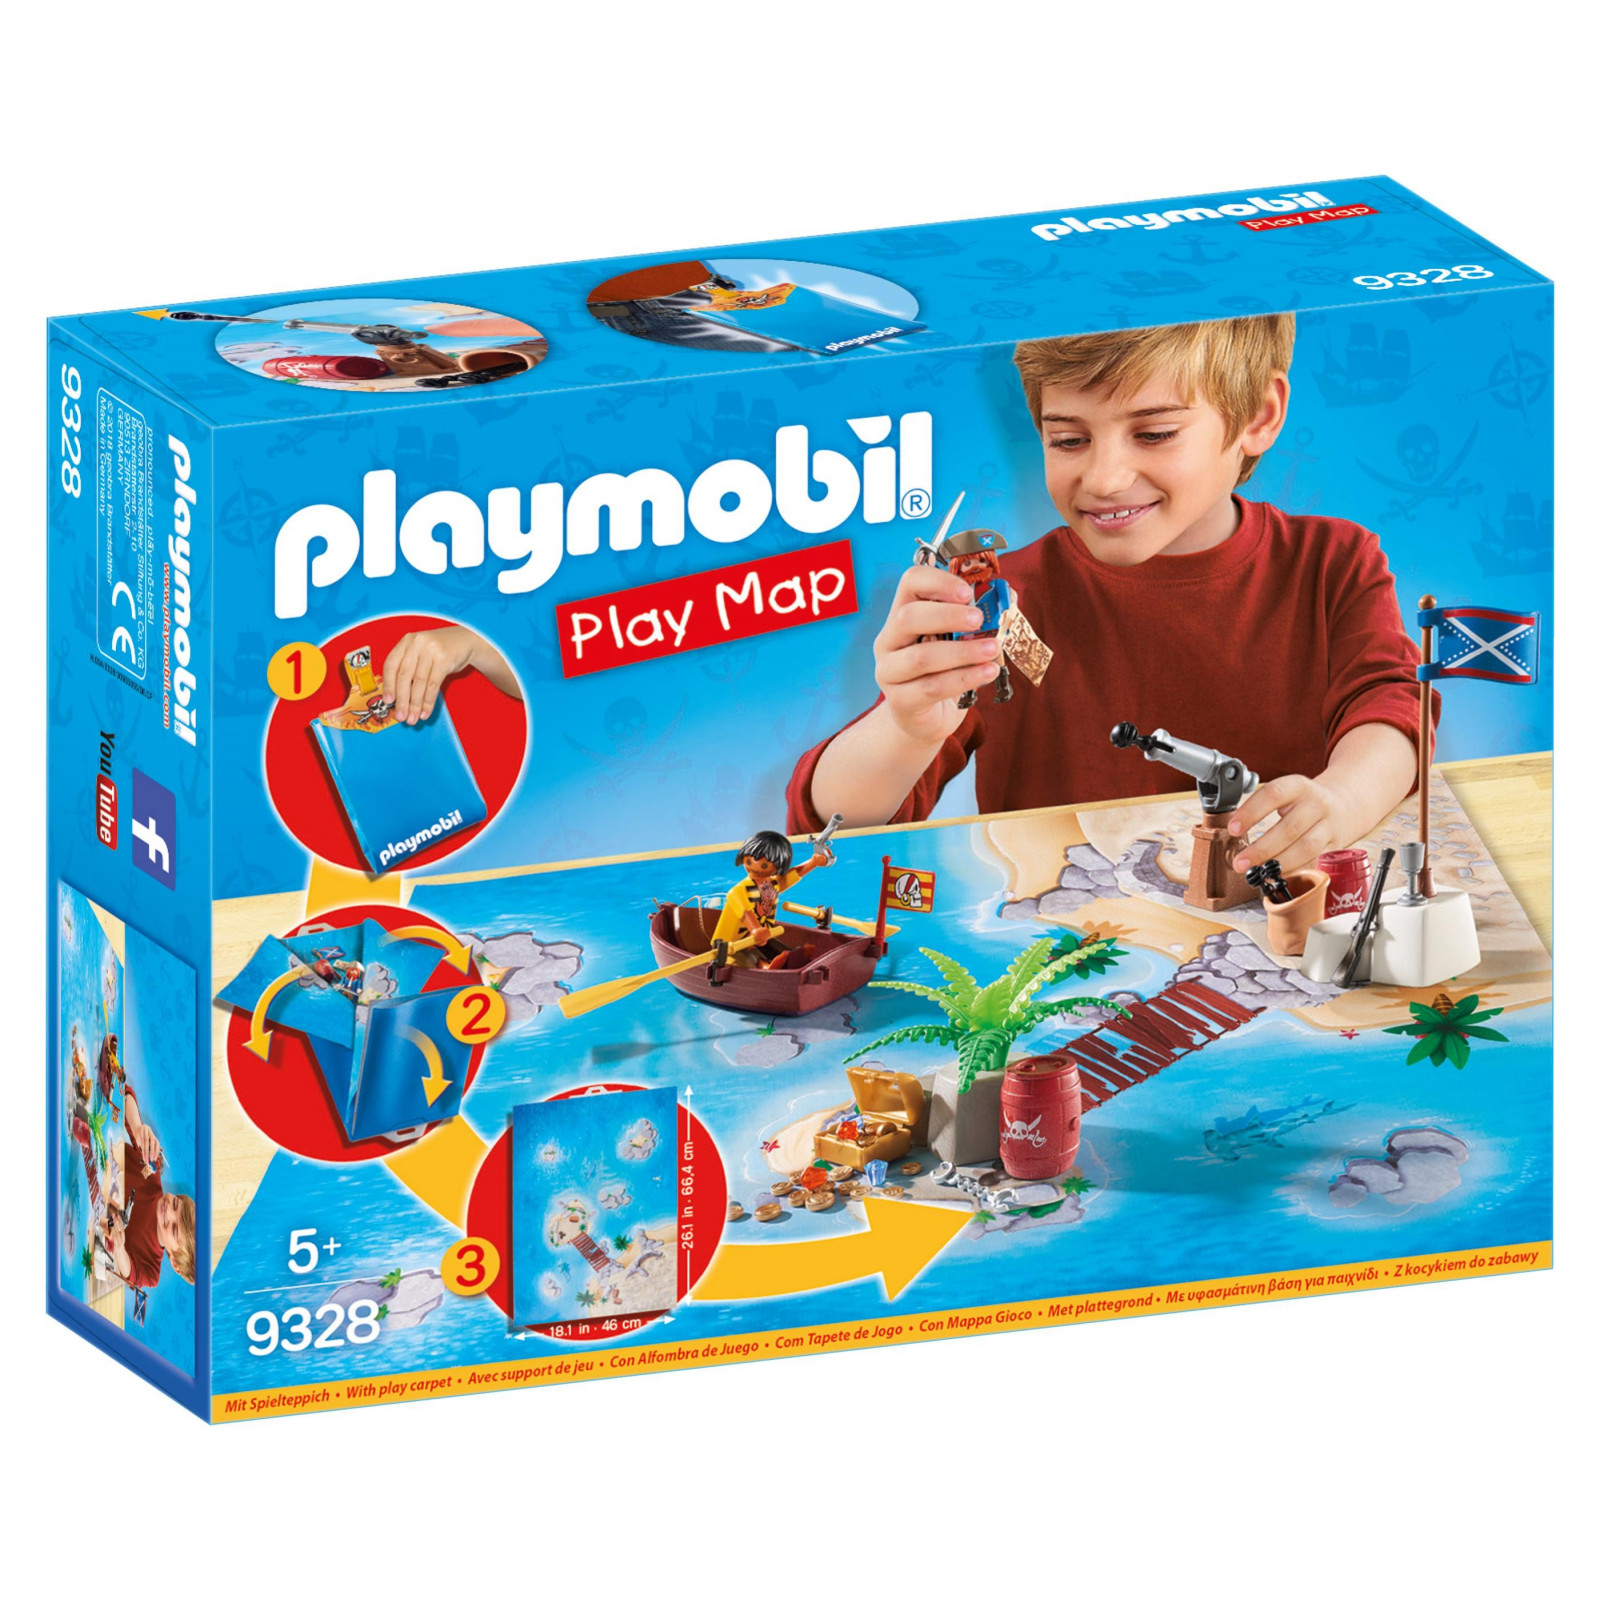 Playmobil play map pirates com acessórios